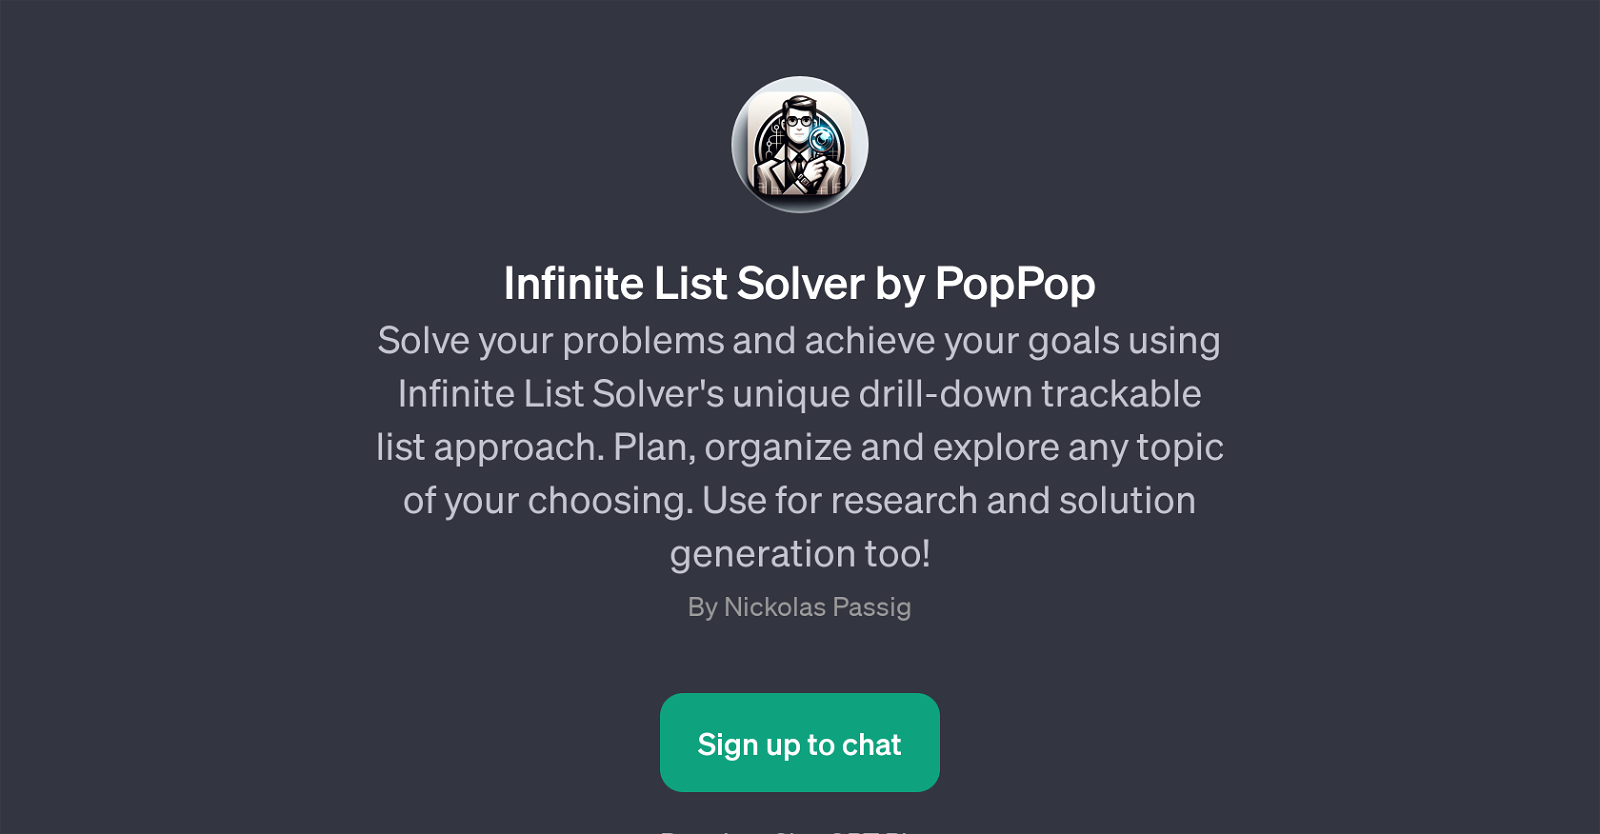 Infinite List Solver by PopPop website